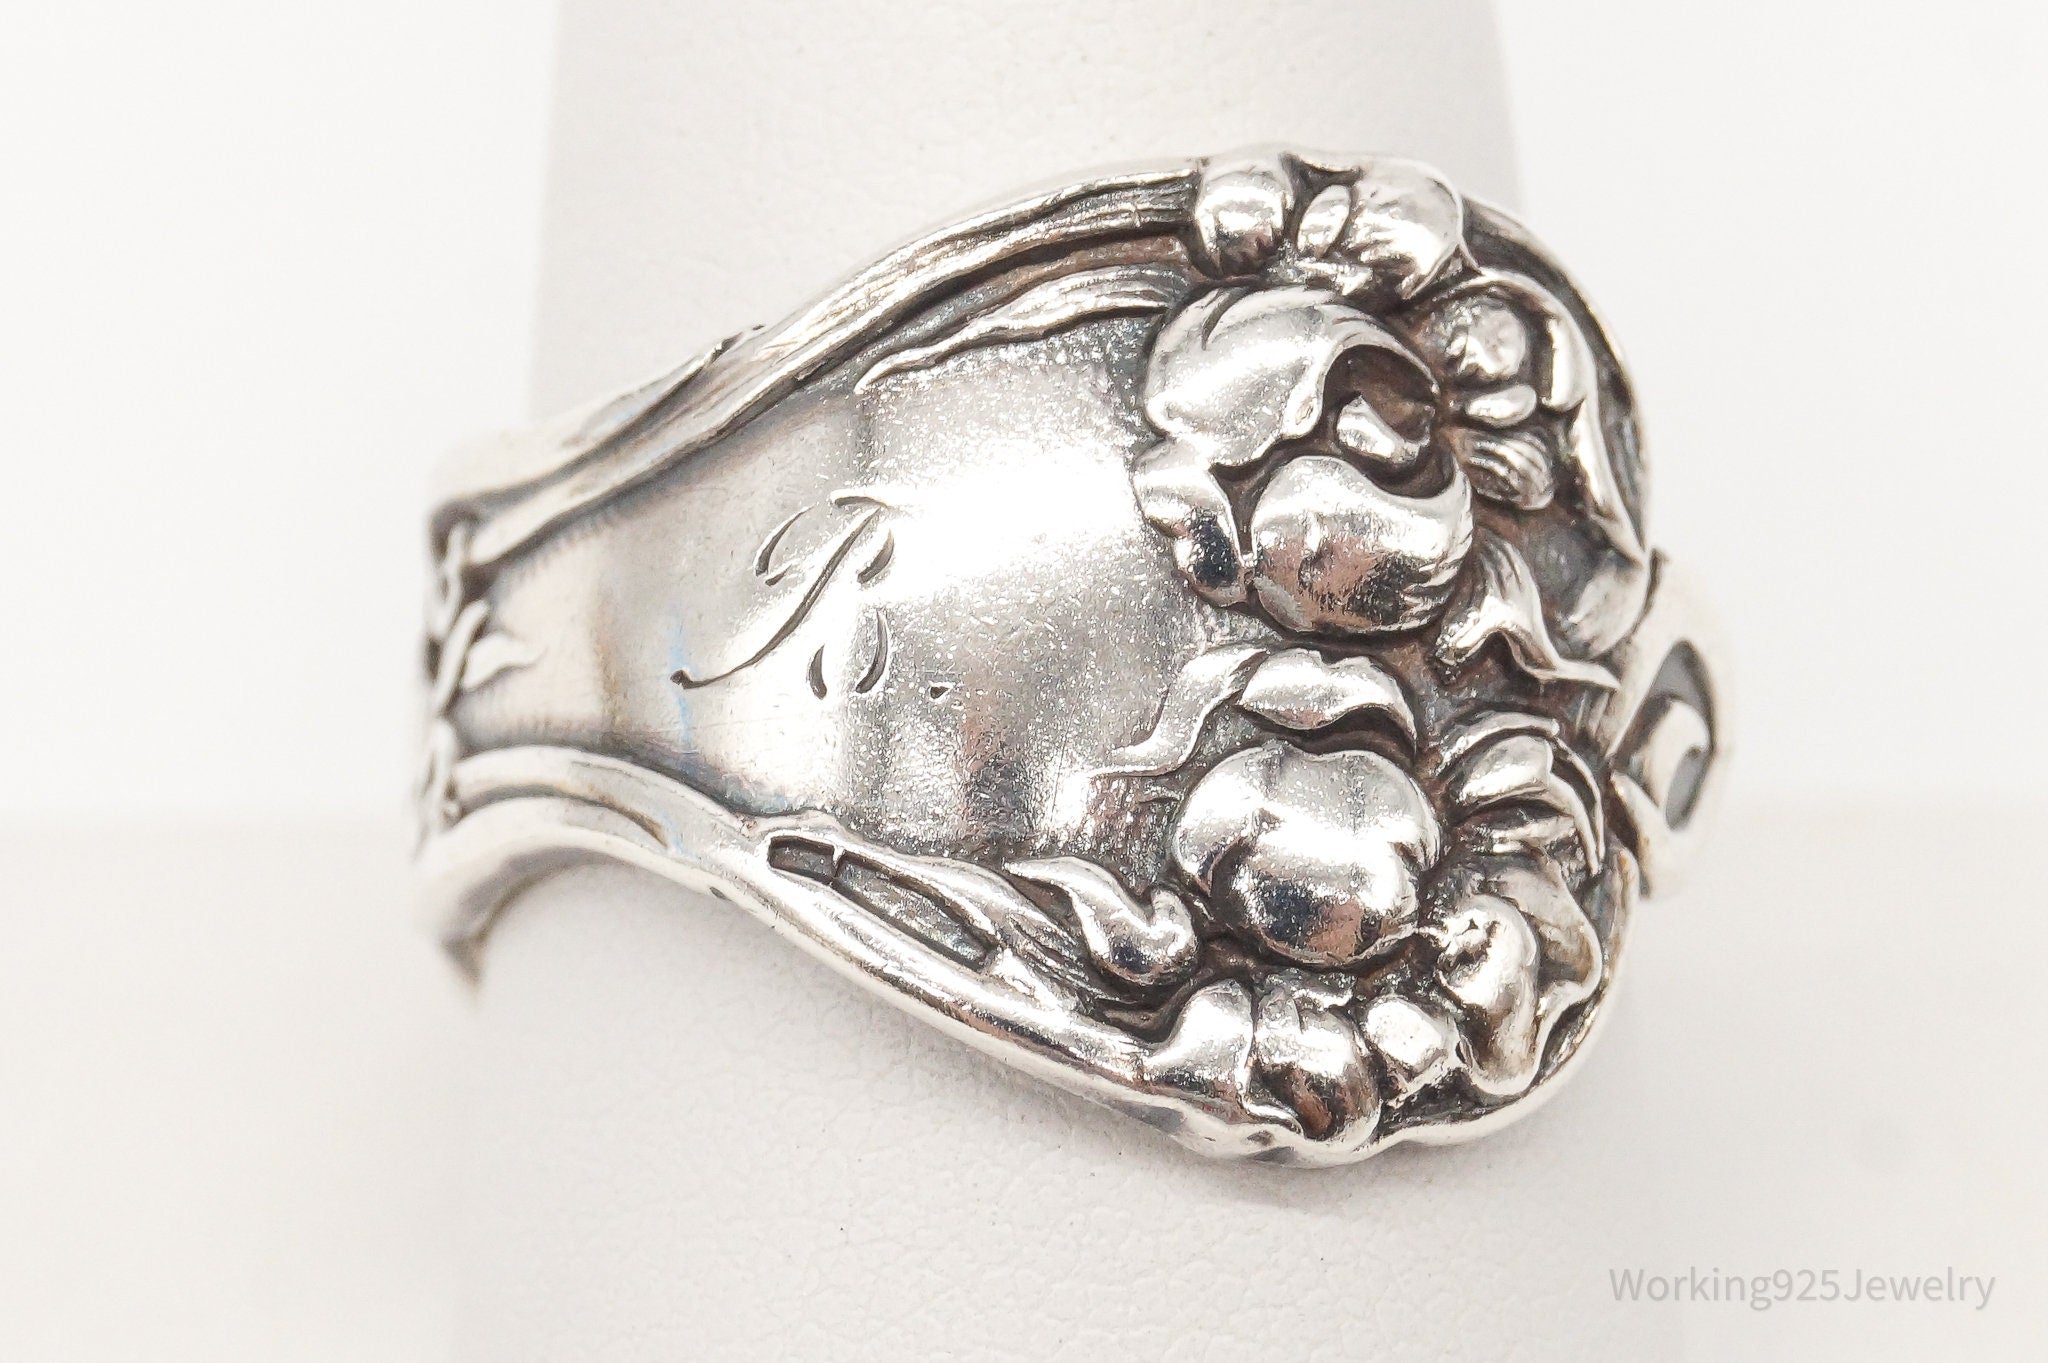 Antique B initial Art Nouveau Silver Spoon Ring Adjustable Size 9.5